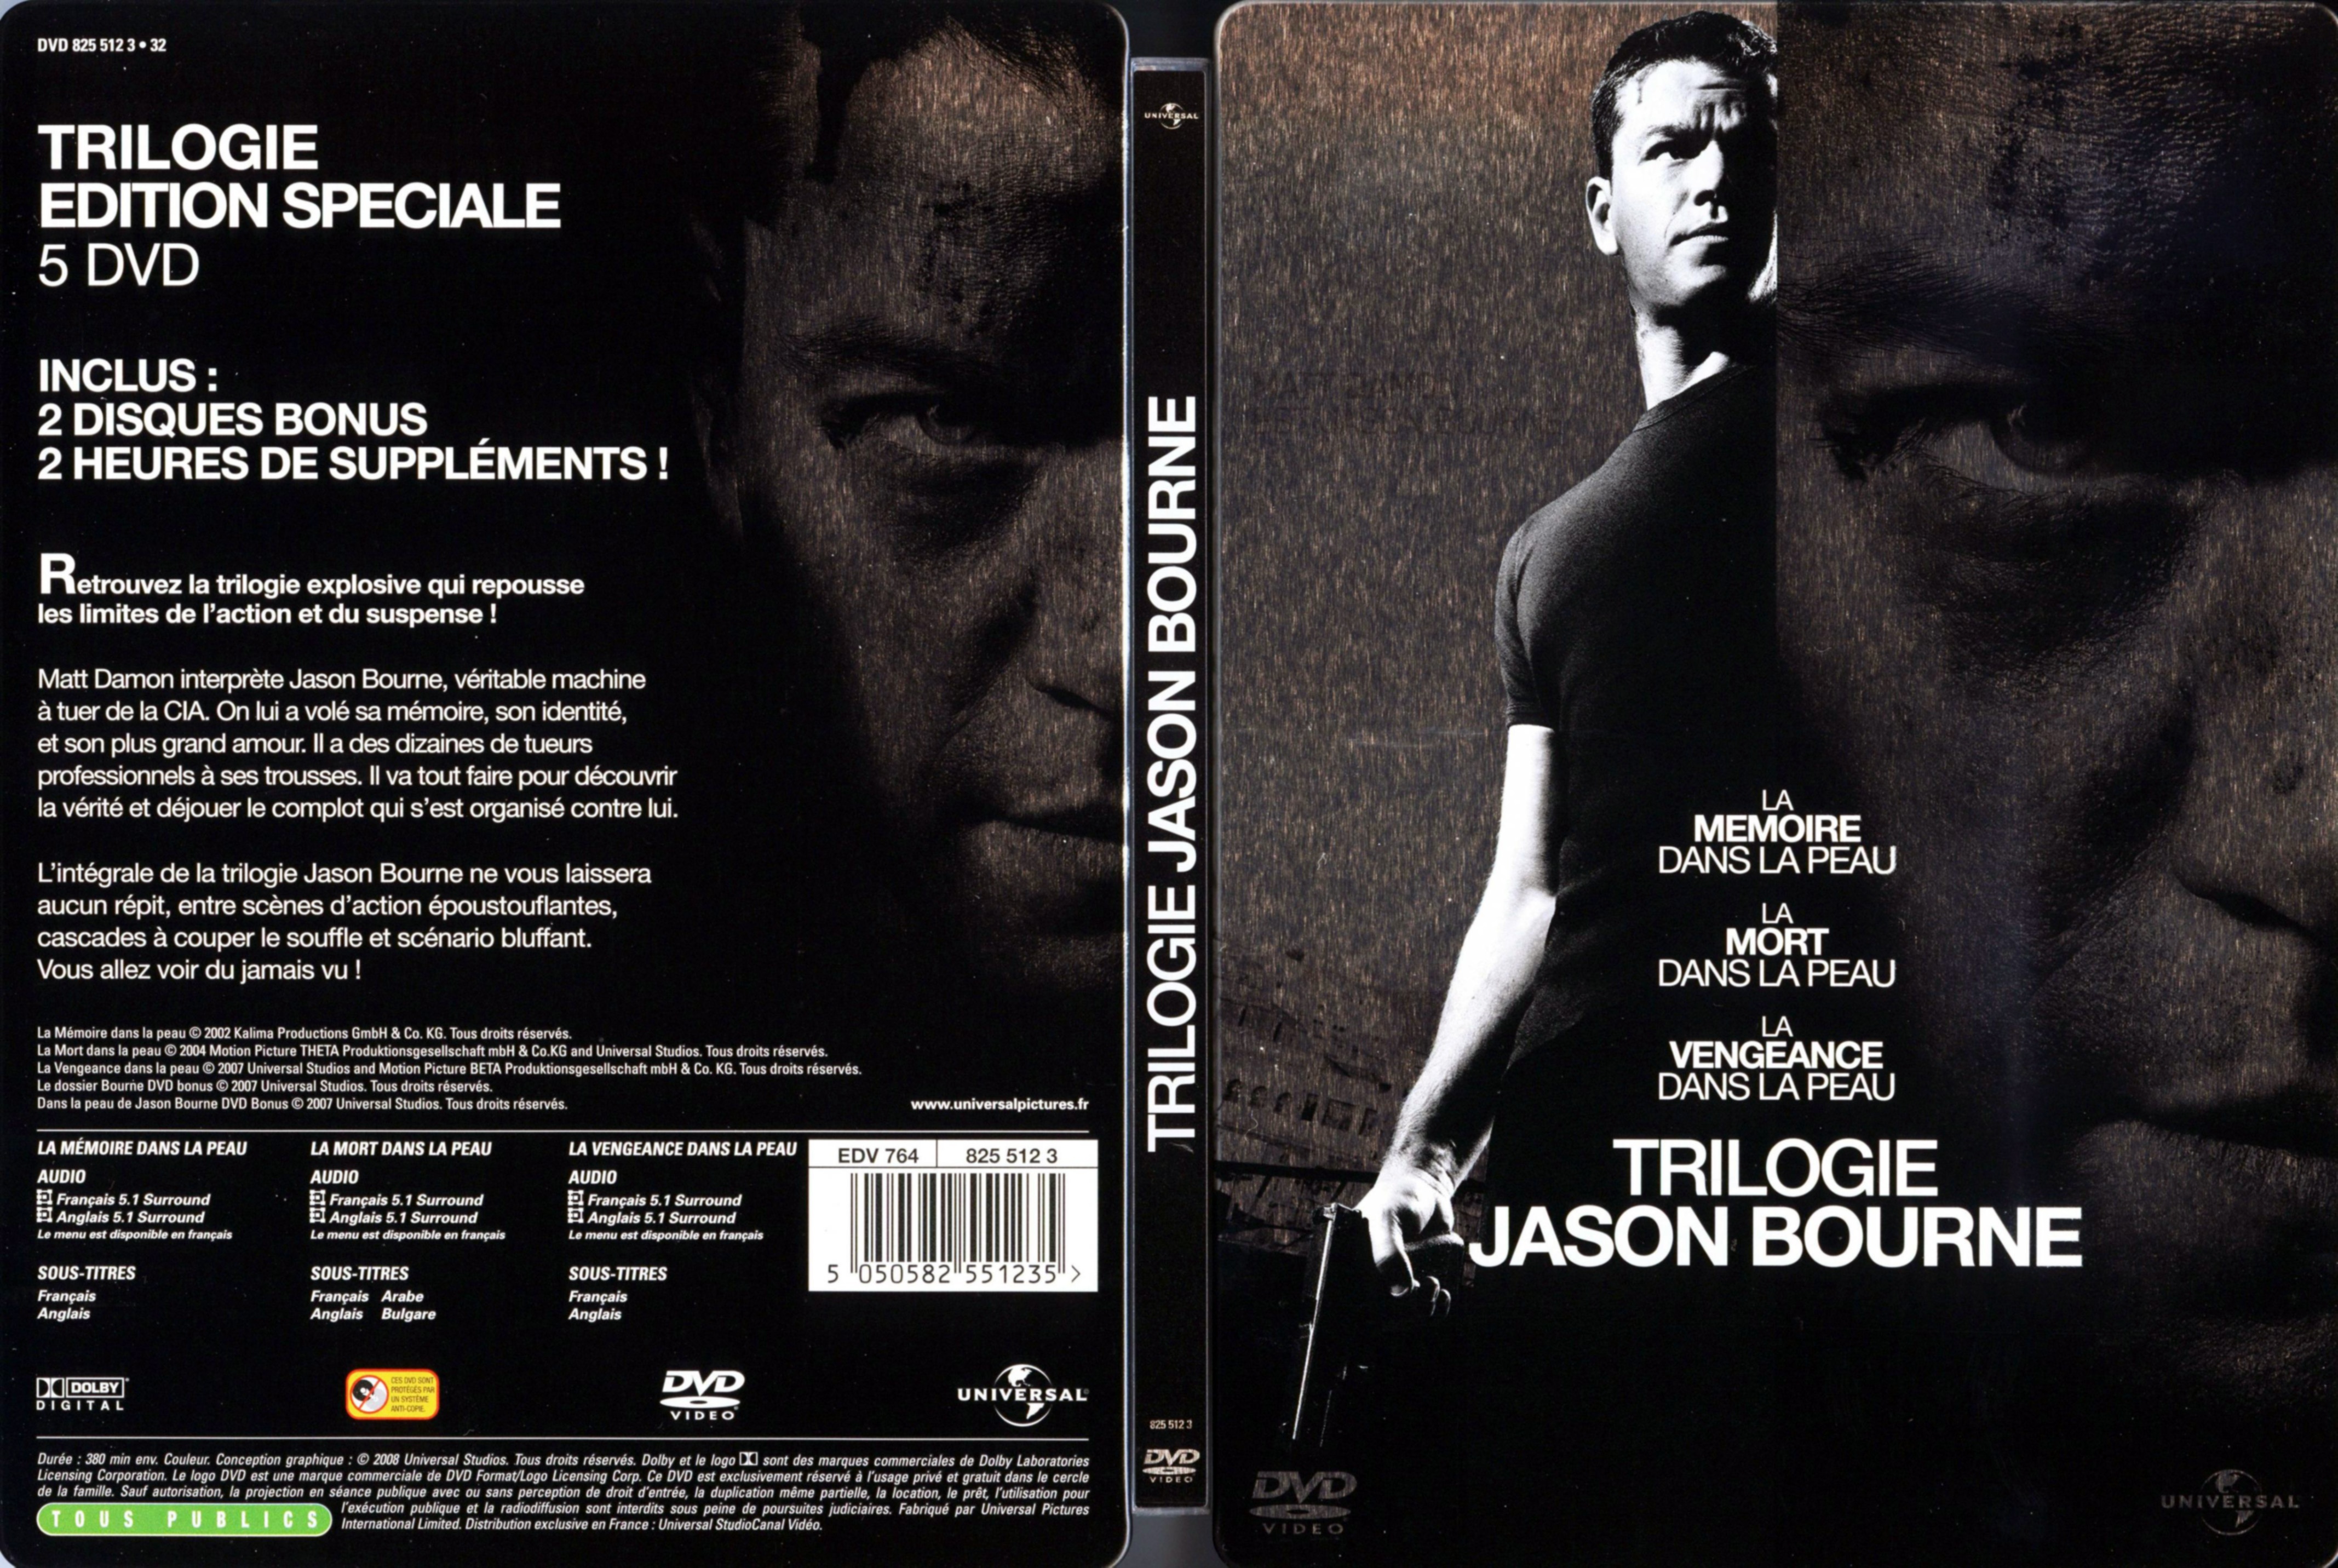 Jaquette DVD Jason Bourne Trilogie